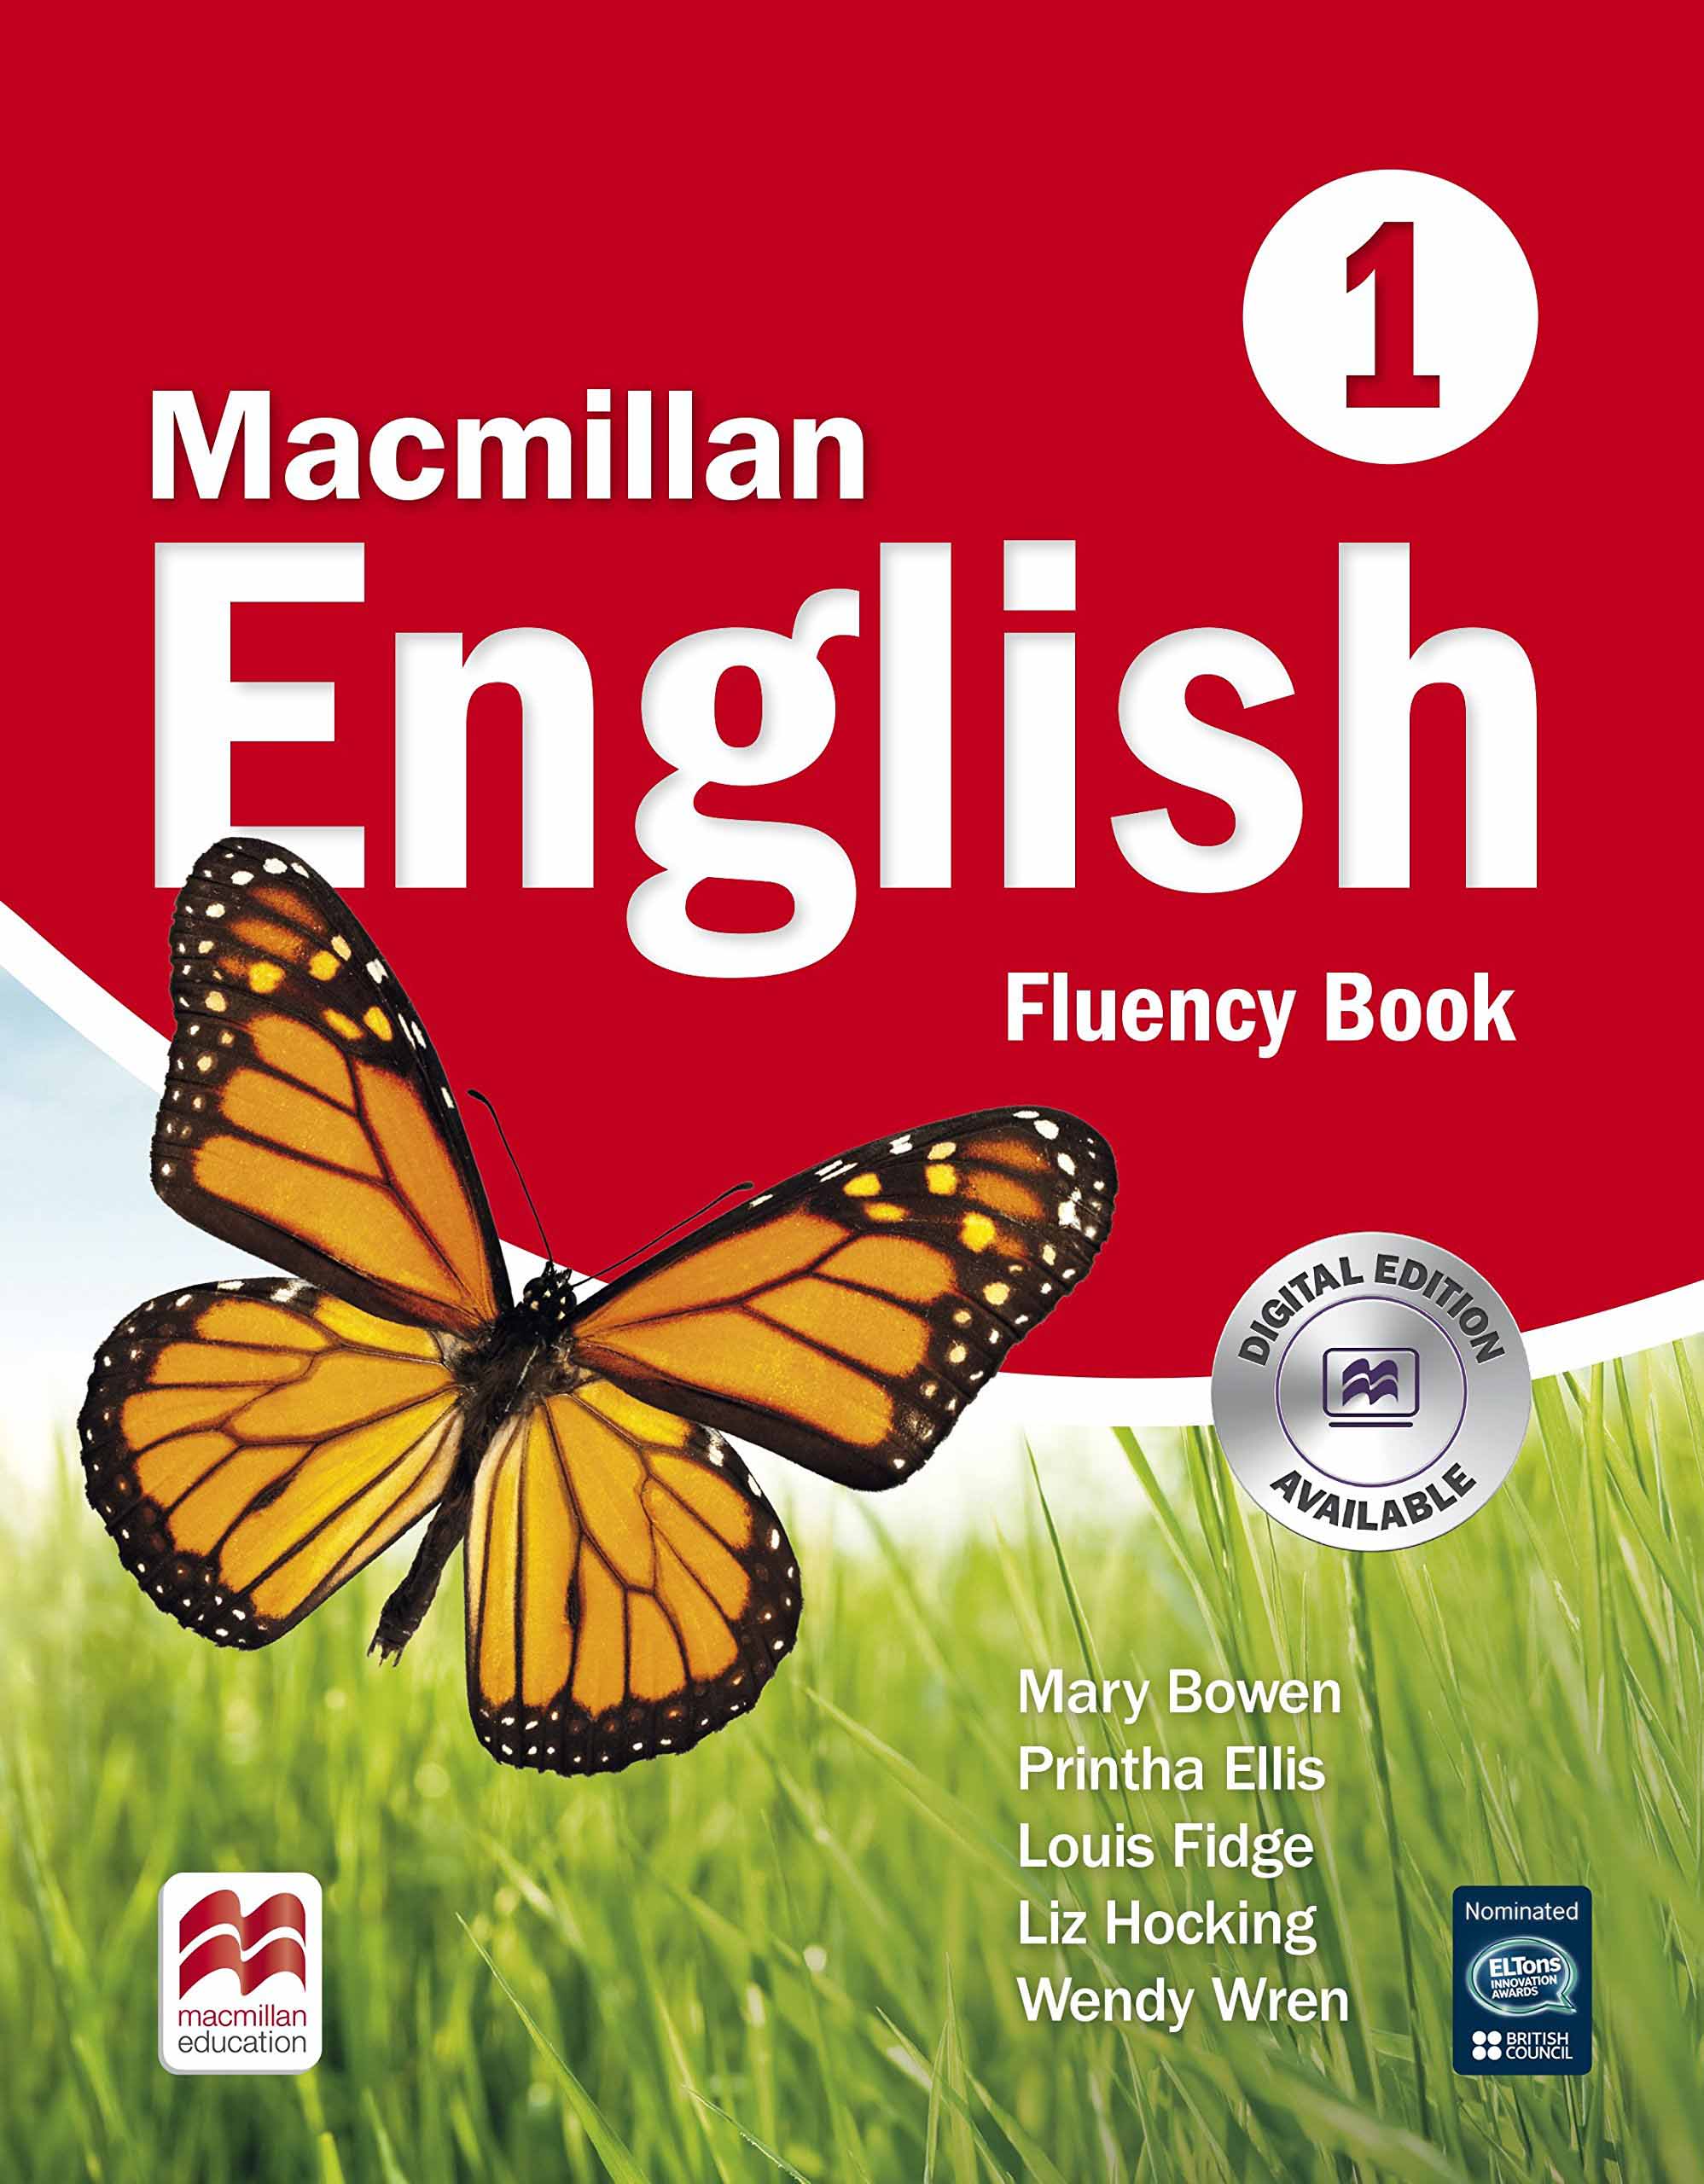 presentations in english macmillan